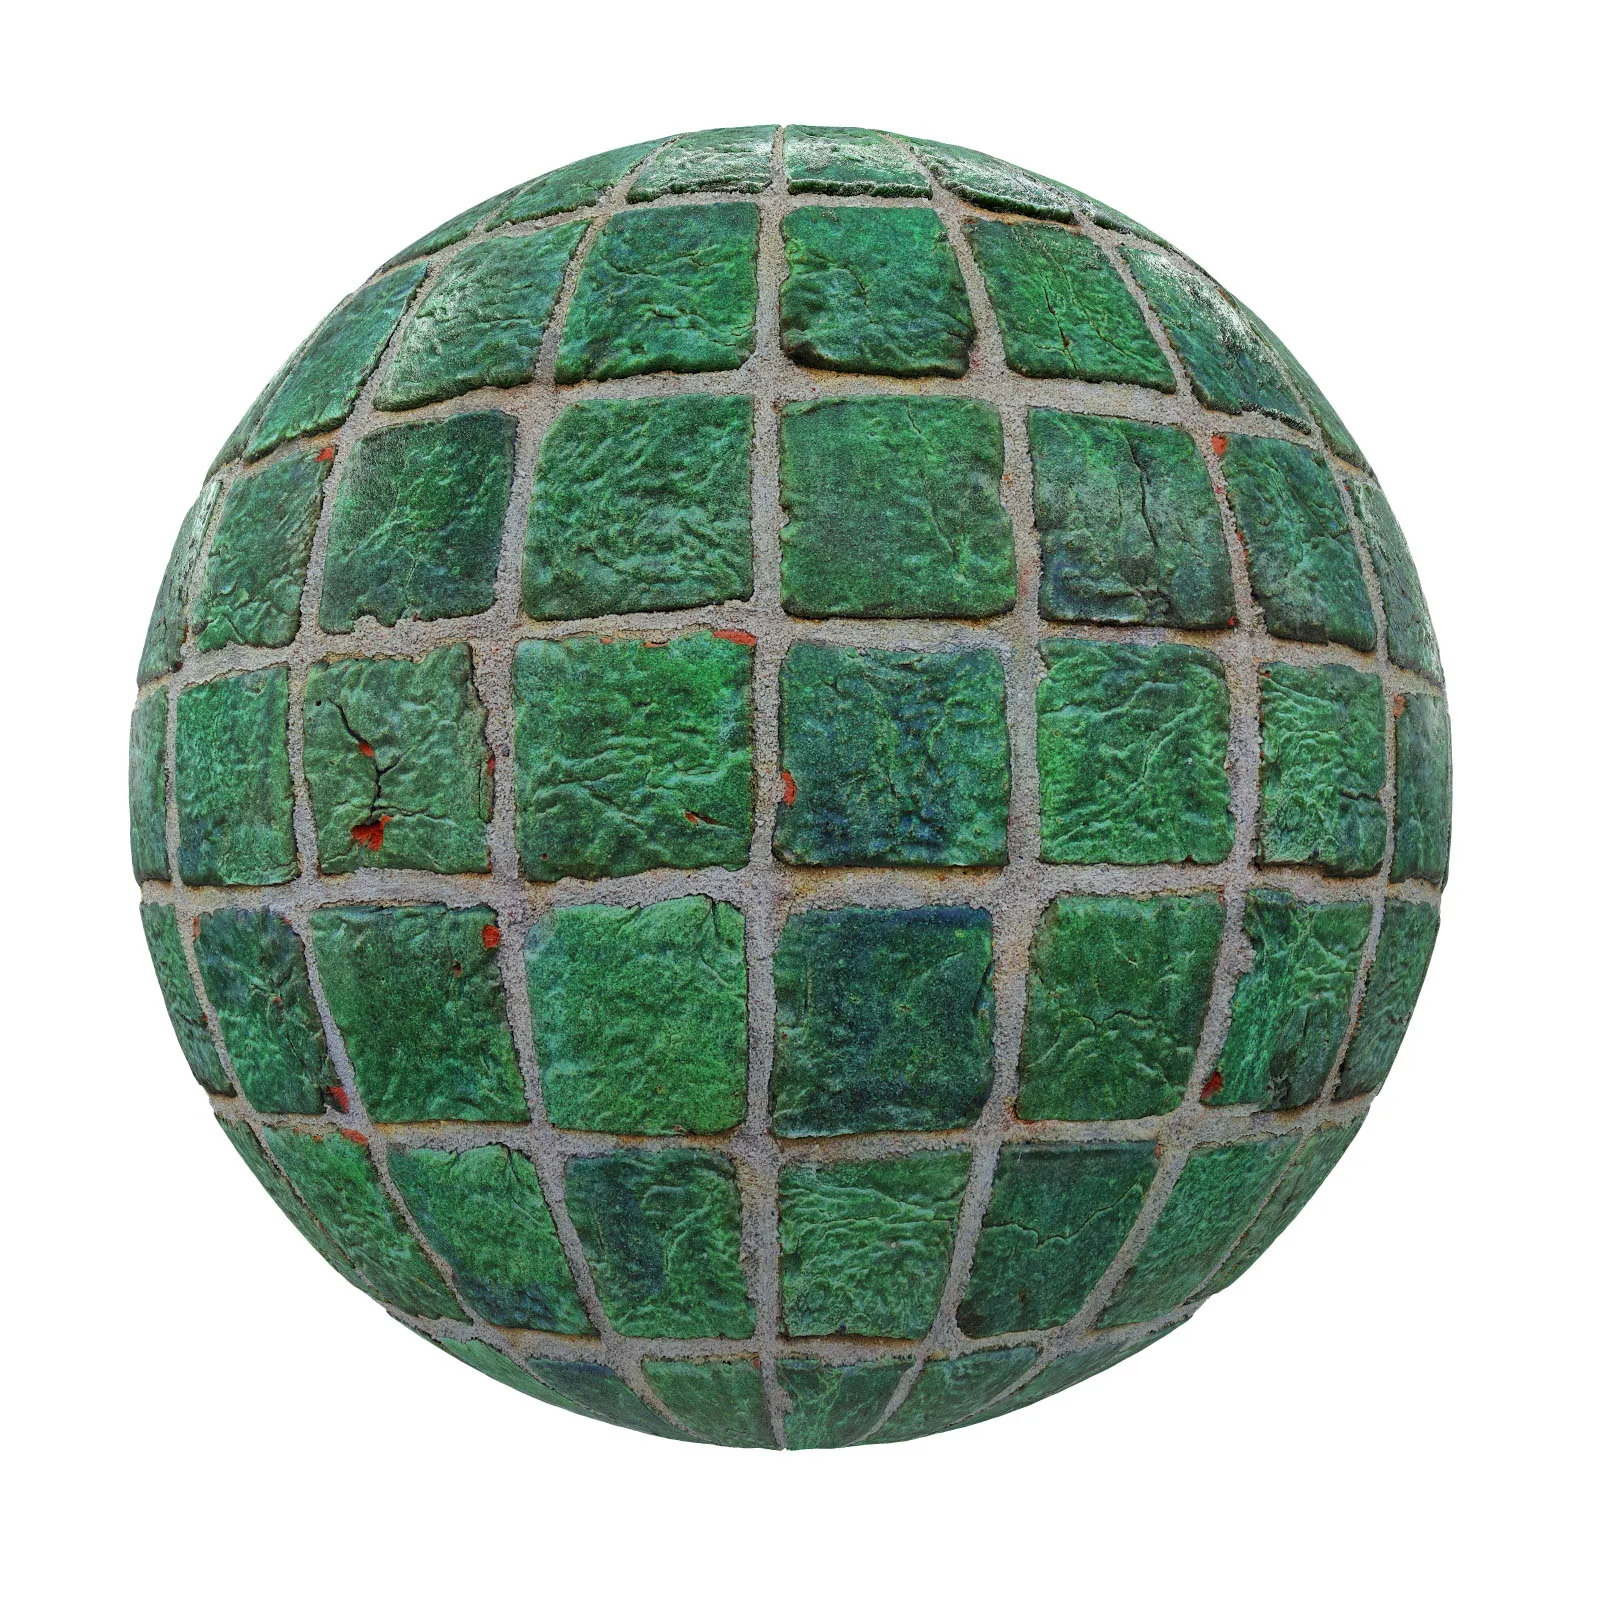 PBR CGAXIS TEXTURES – TILES – Old Green Tiles